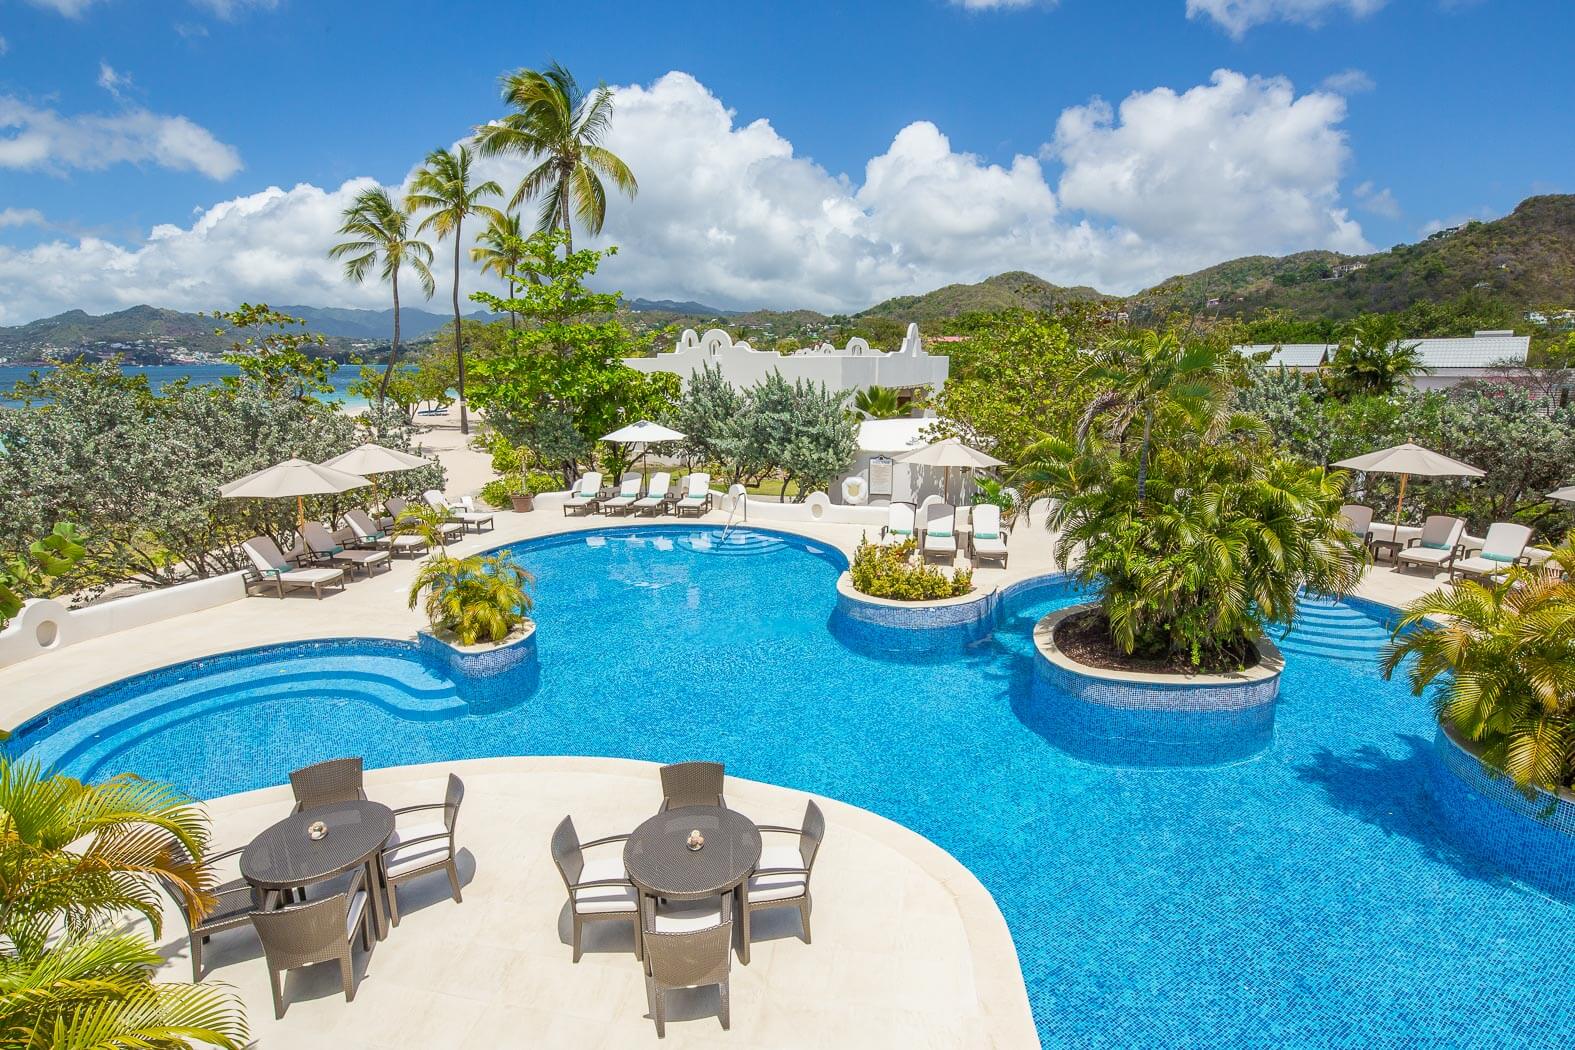 Spice Island Beach Resort, Grenada: caribbean island resorts